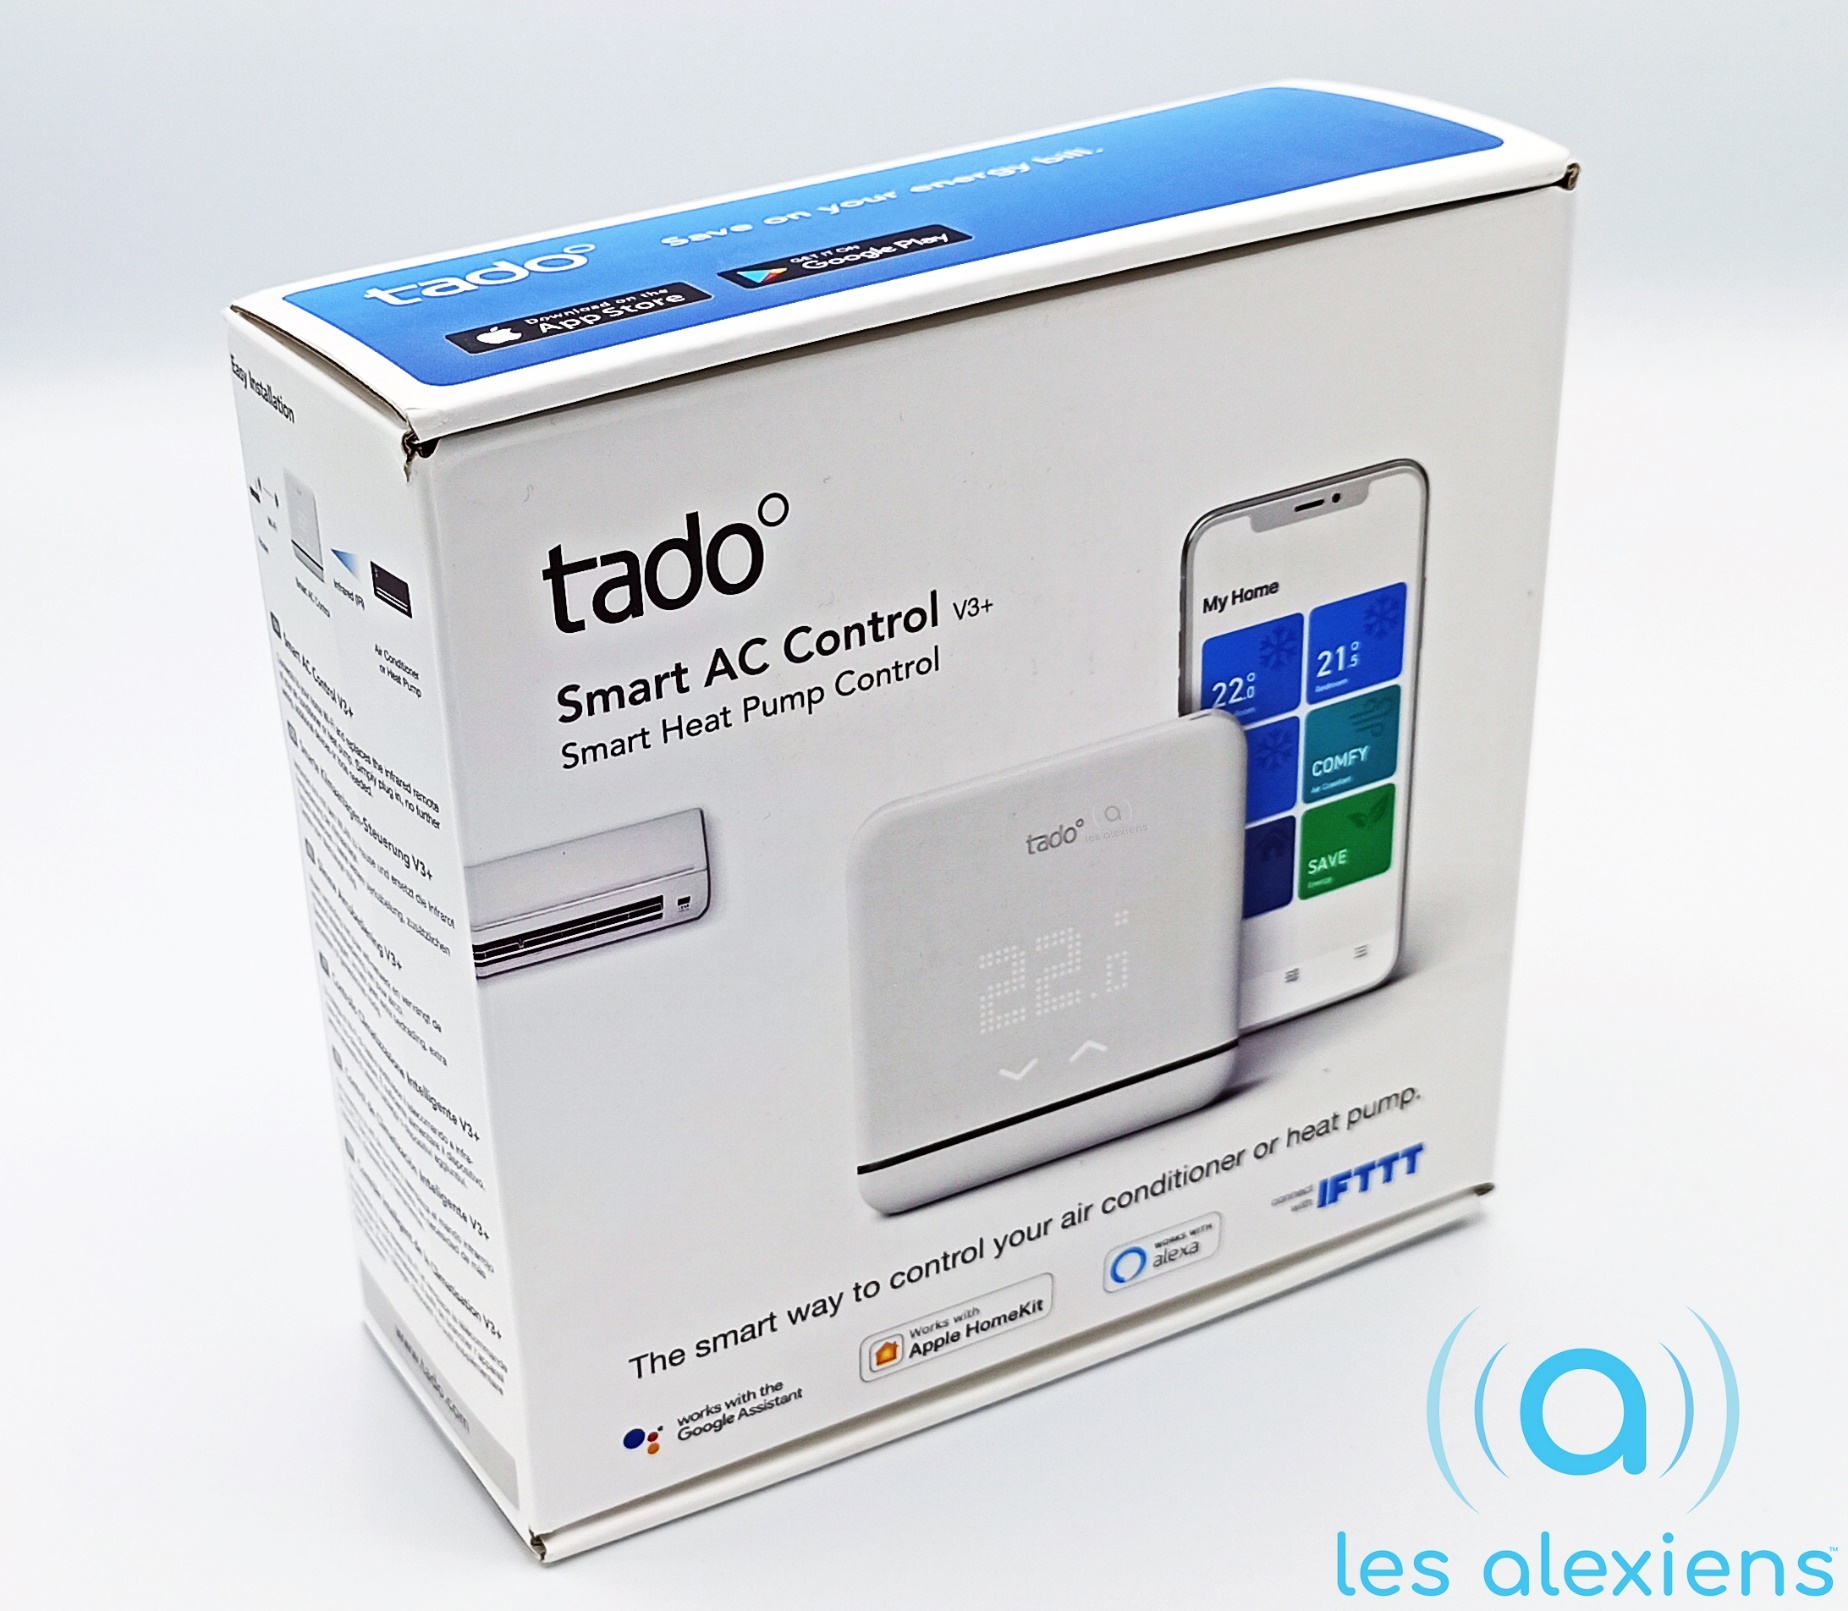 Systèmes Connectés, Tado° Smart Ac Control V3+, tado°